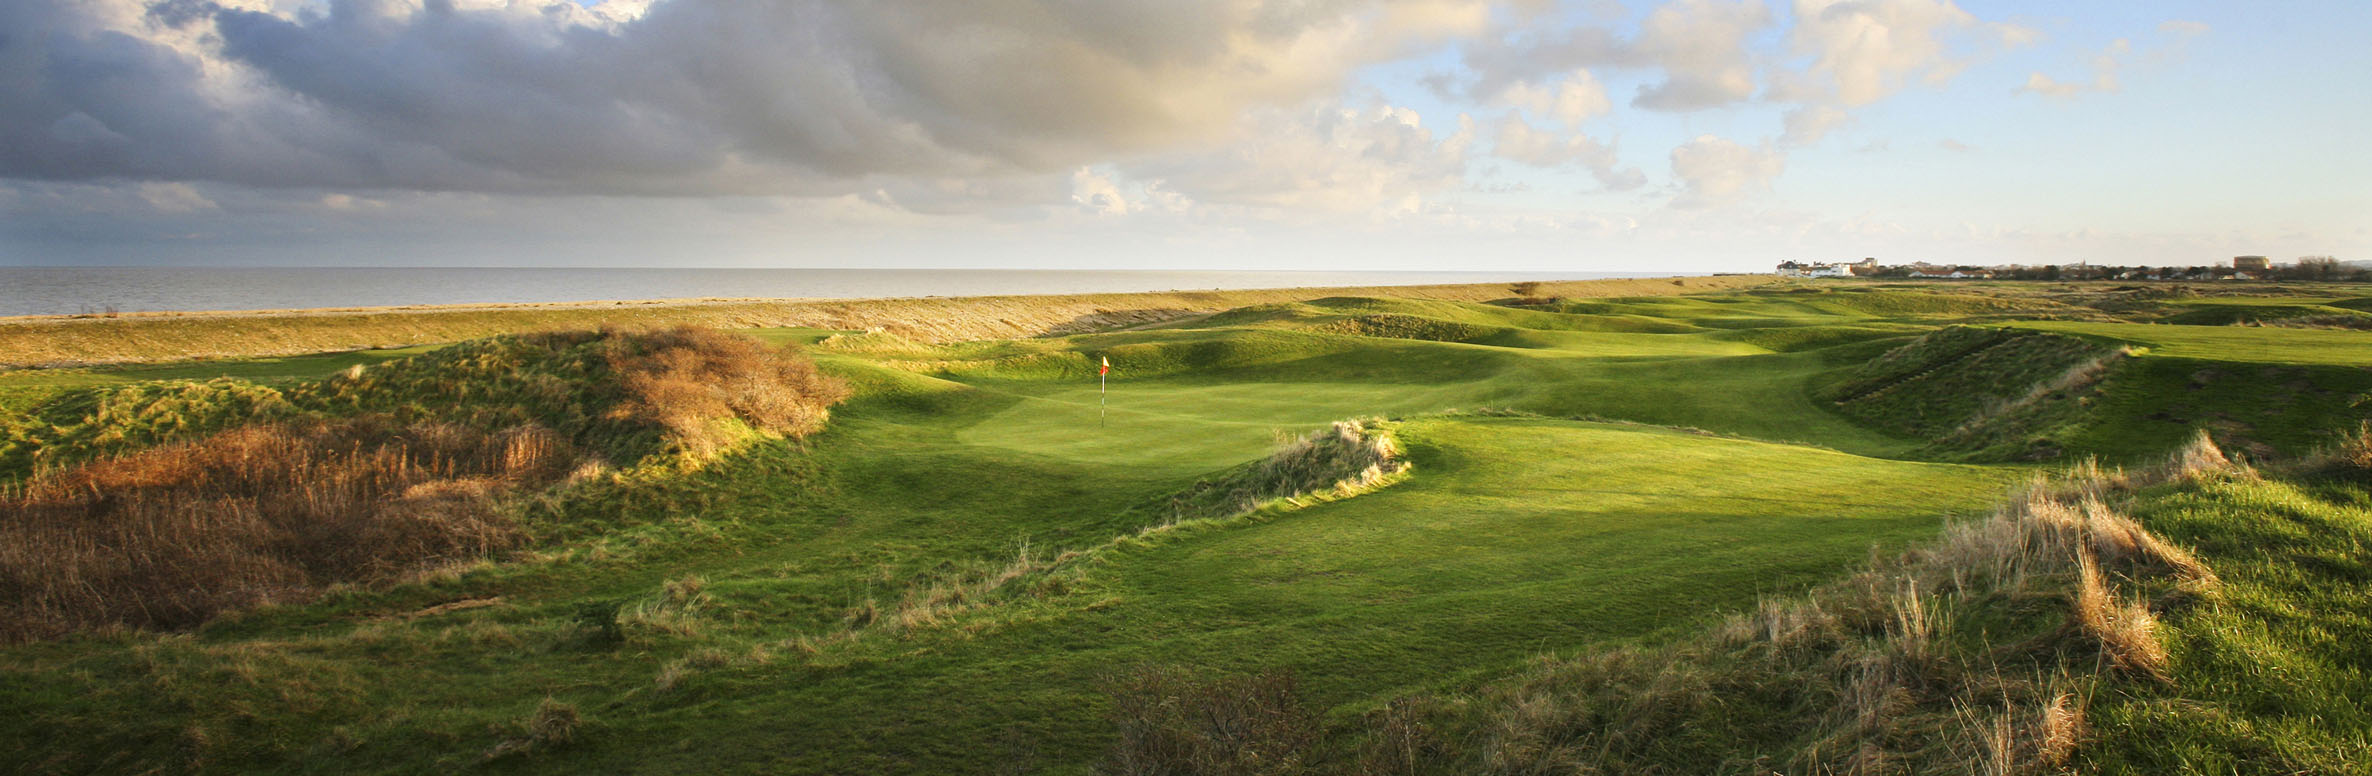 Golf Course Image - Royal Cinque Ports Golf Club No. 3